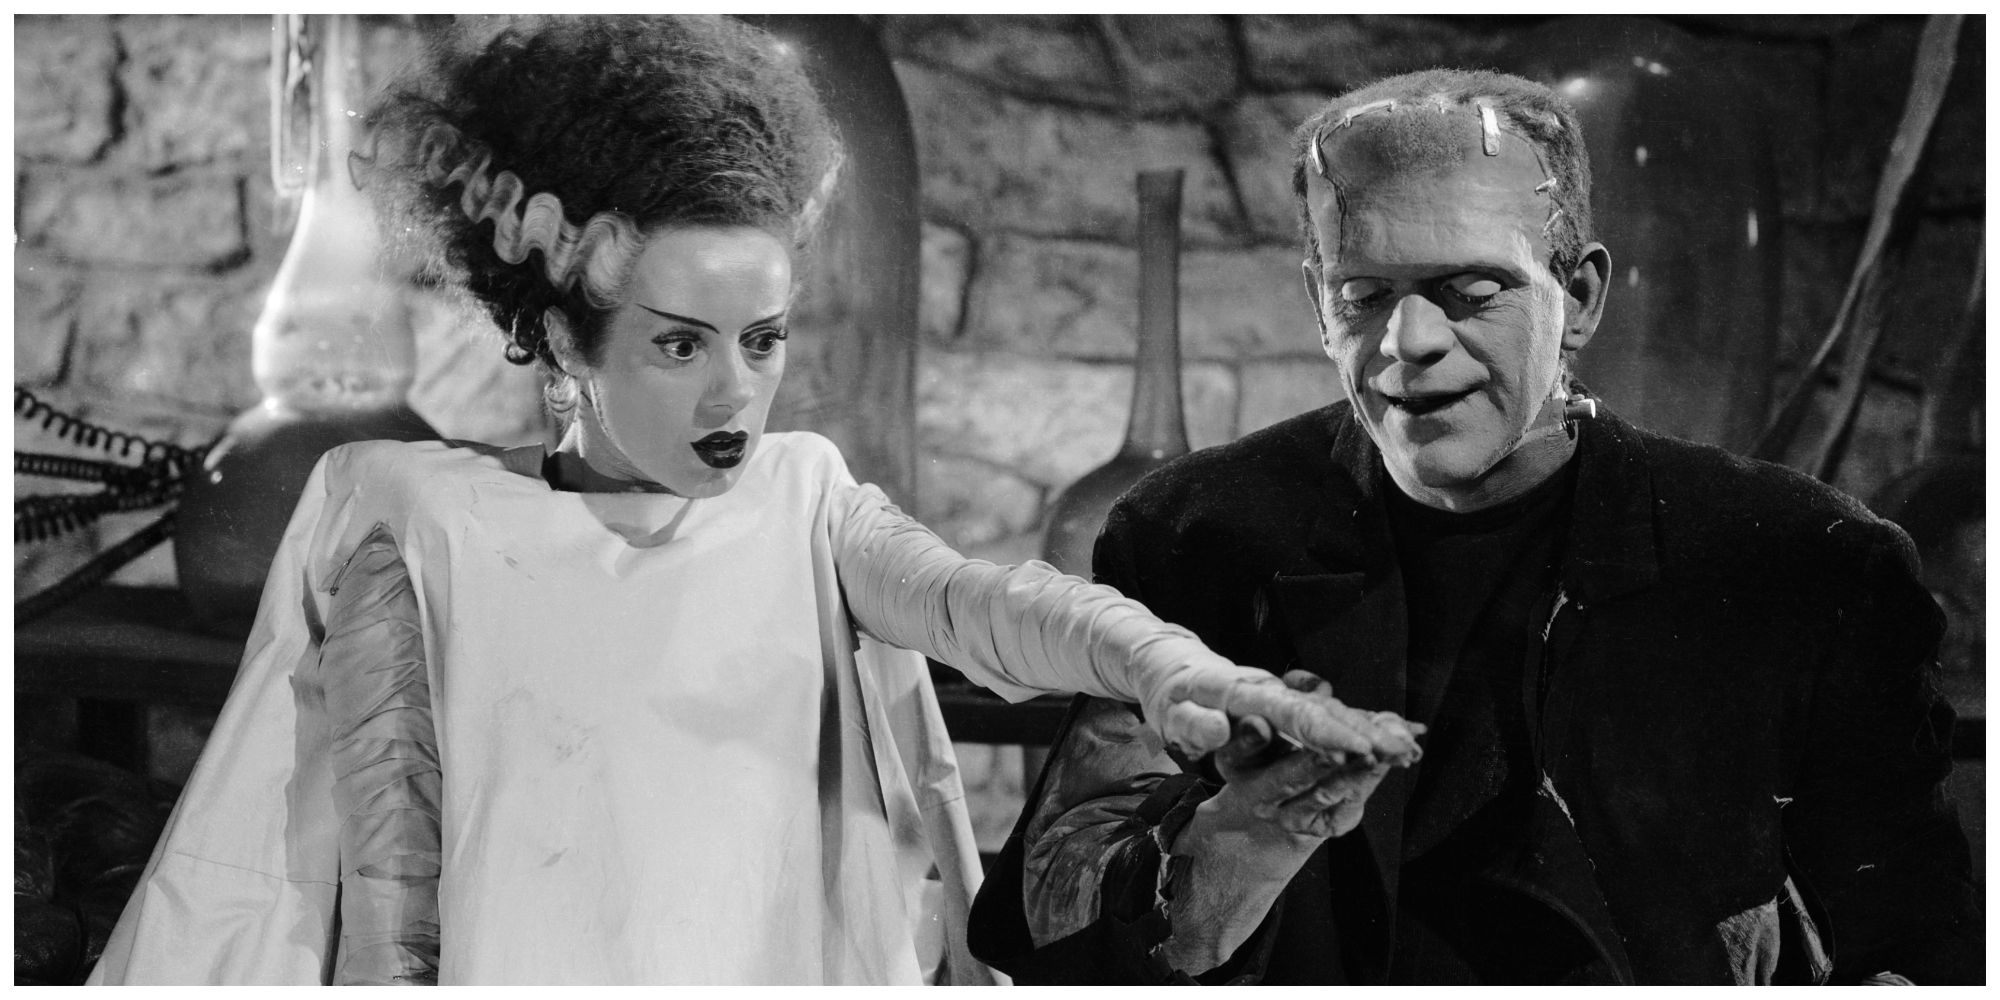 The Bride Of Frankenstein (1935)